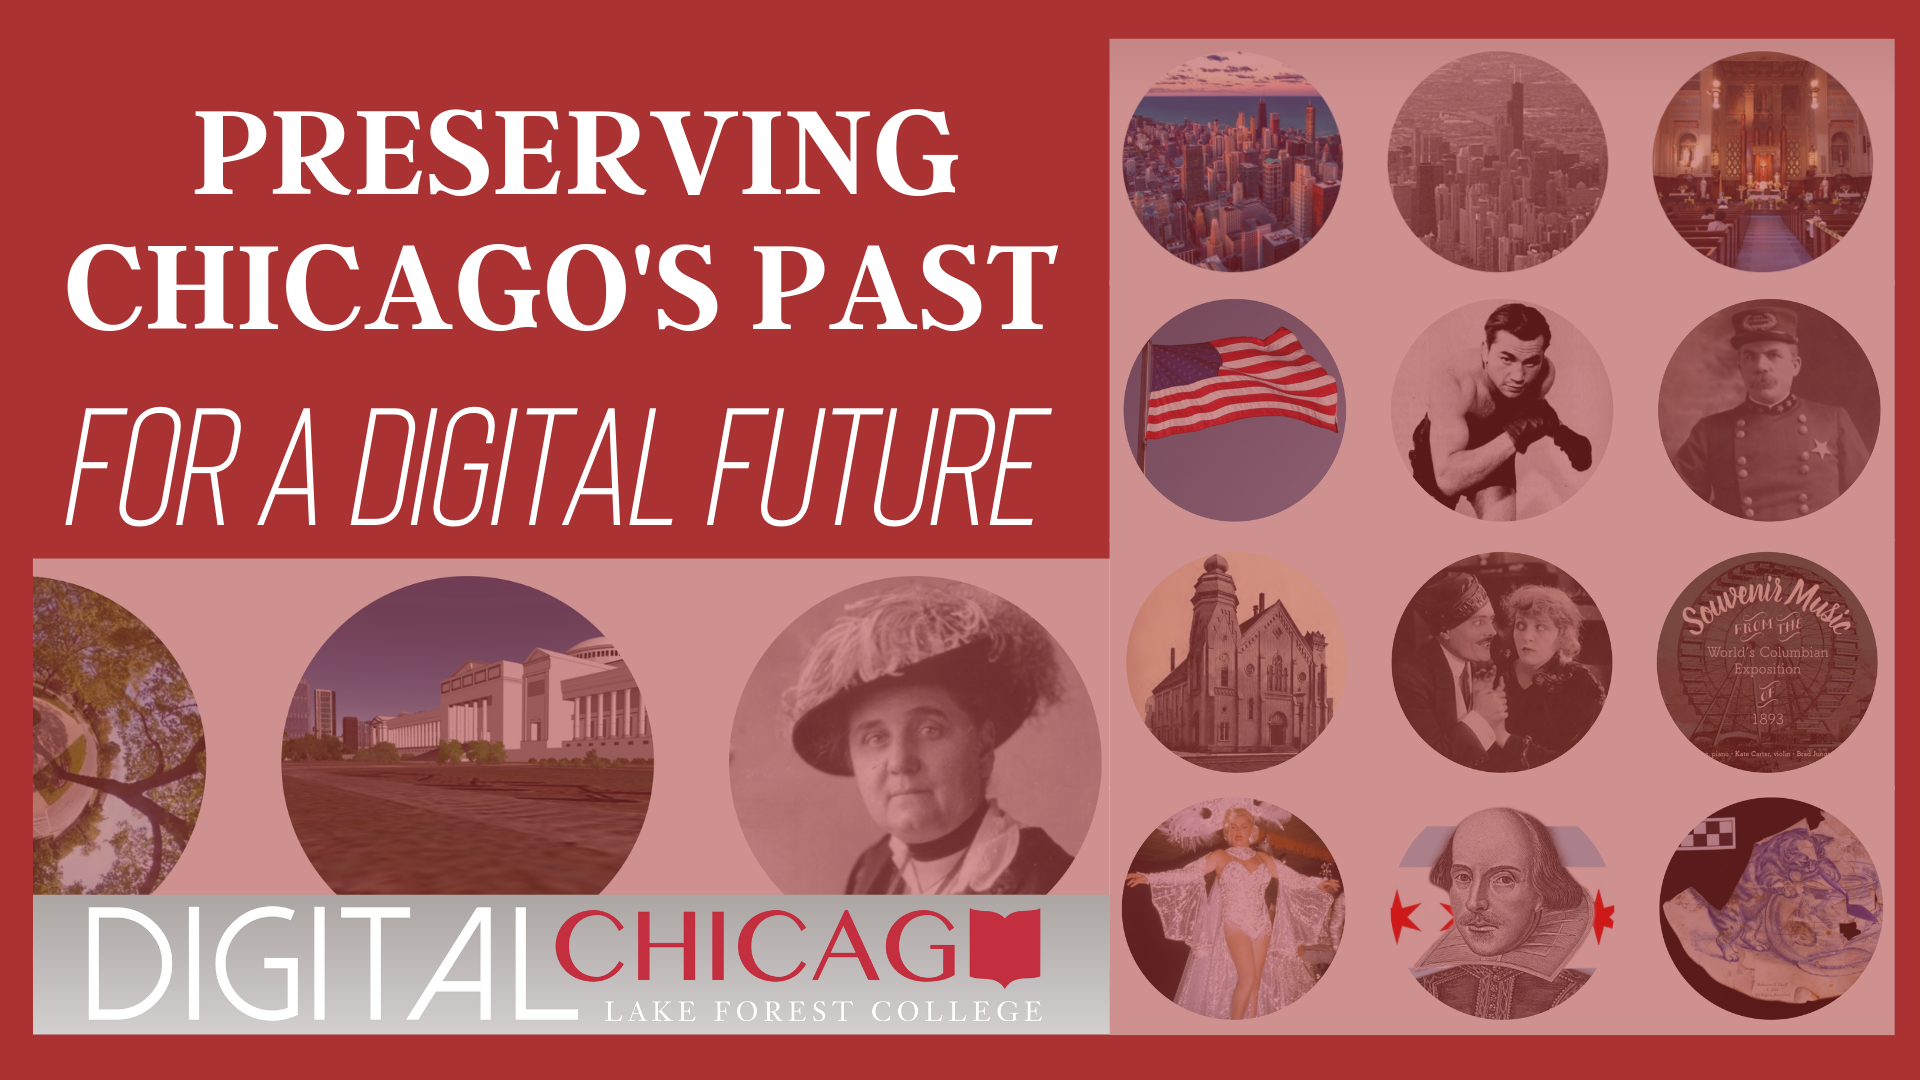 Digital Chicago History website image